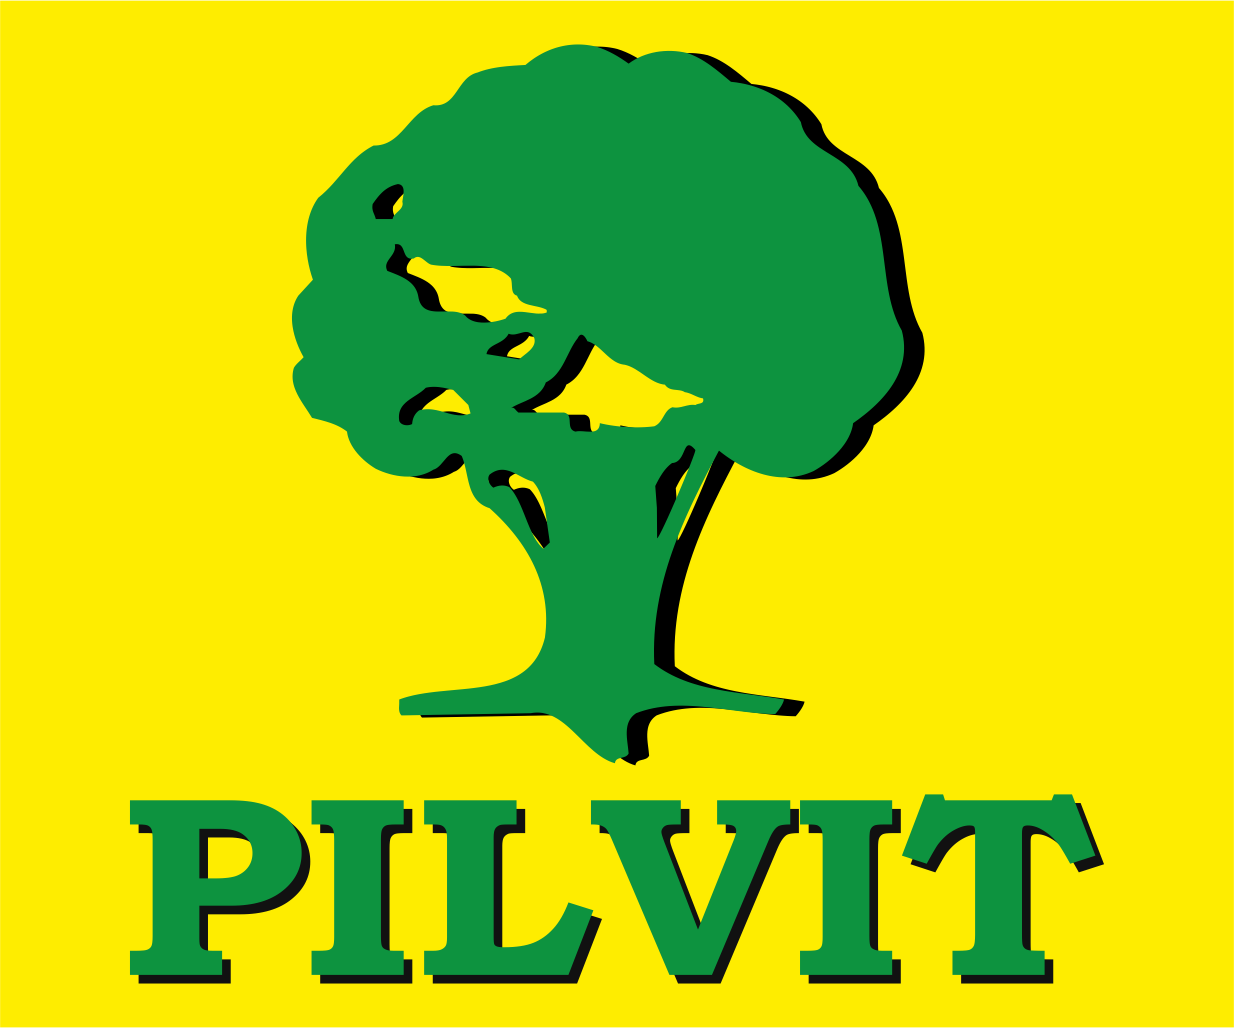 point_pilvit_logo_1